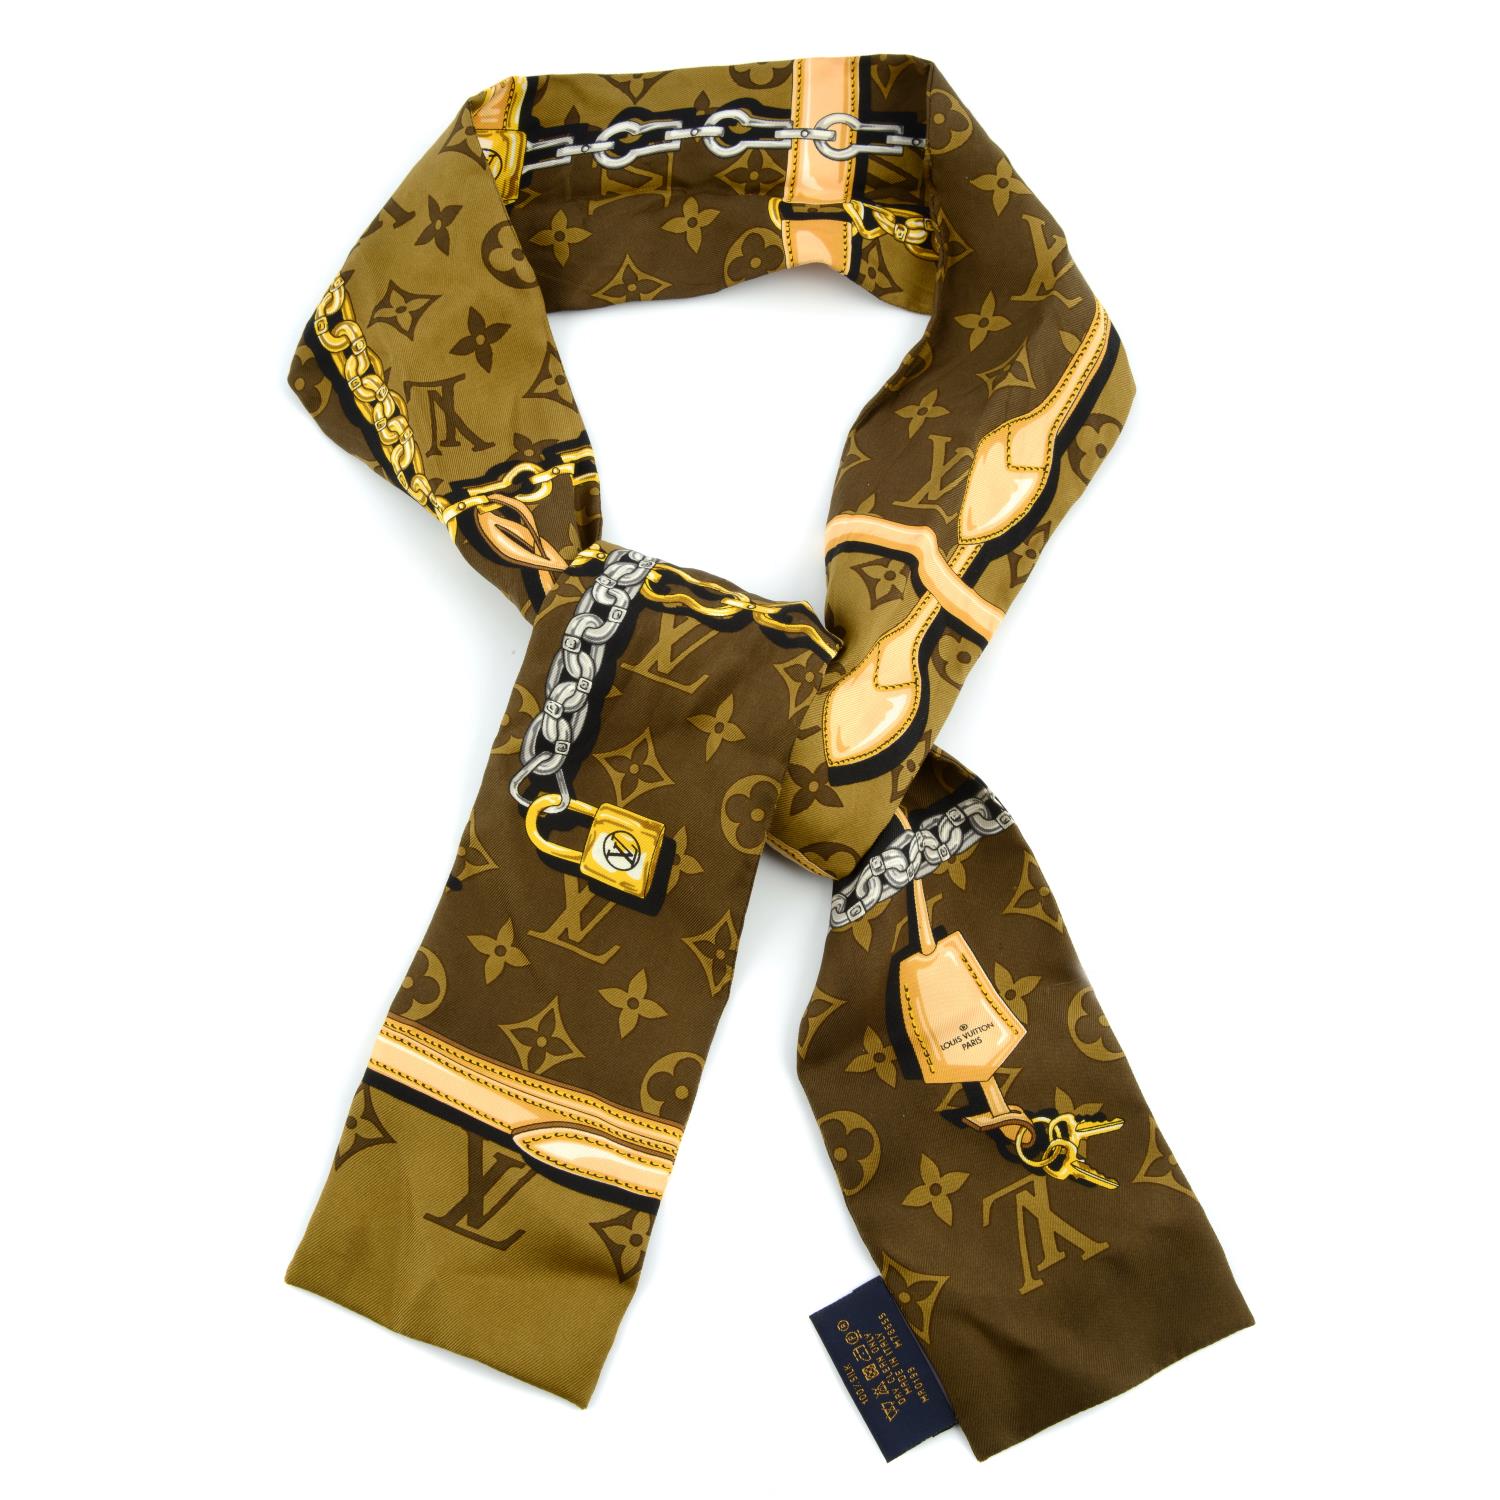 LOUIS VUITTON - a brown Monogram Confidential bandeau scarf.